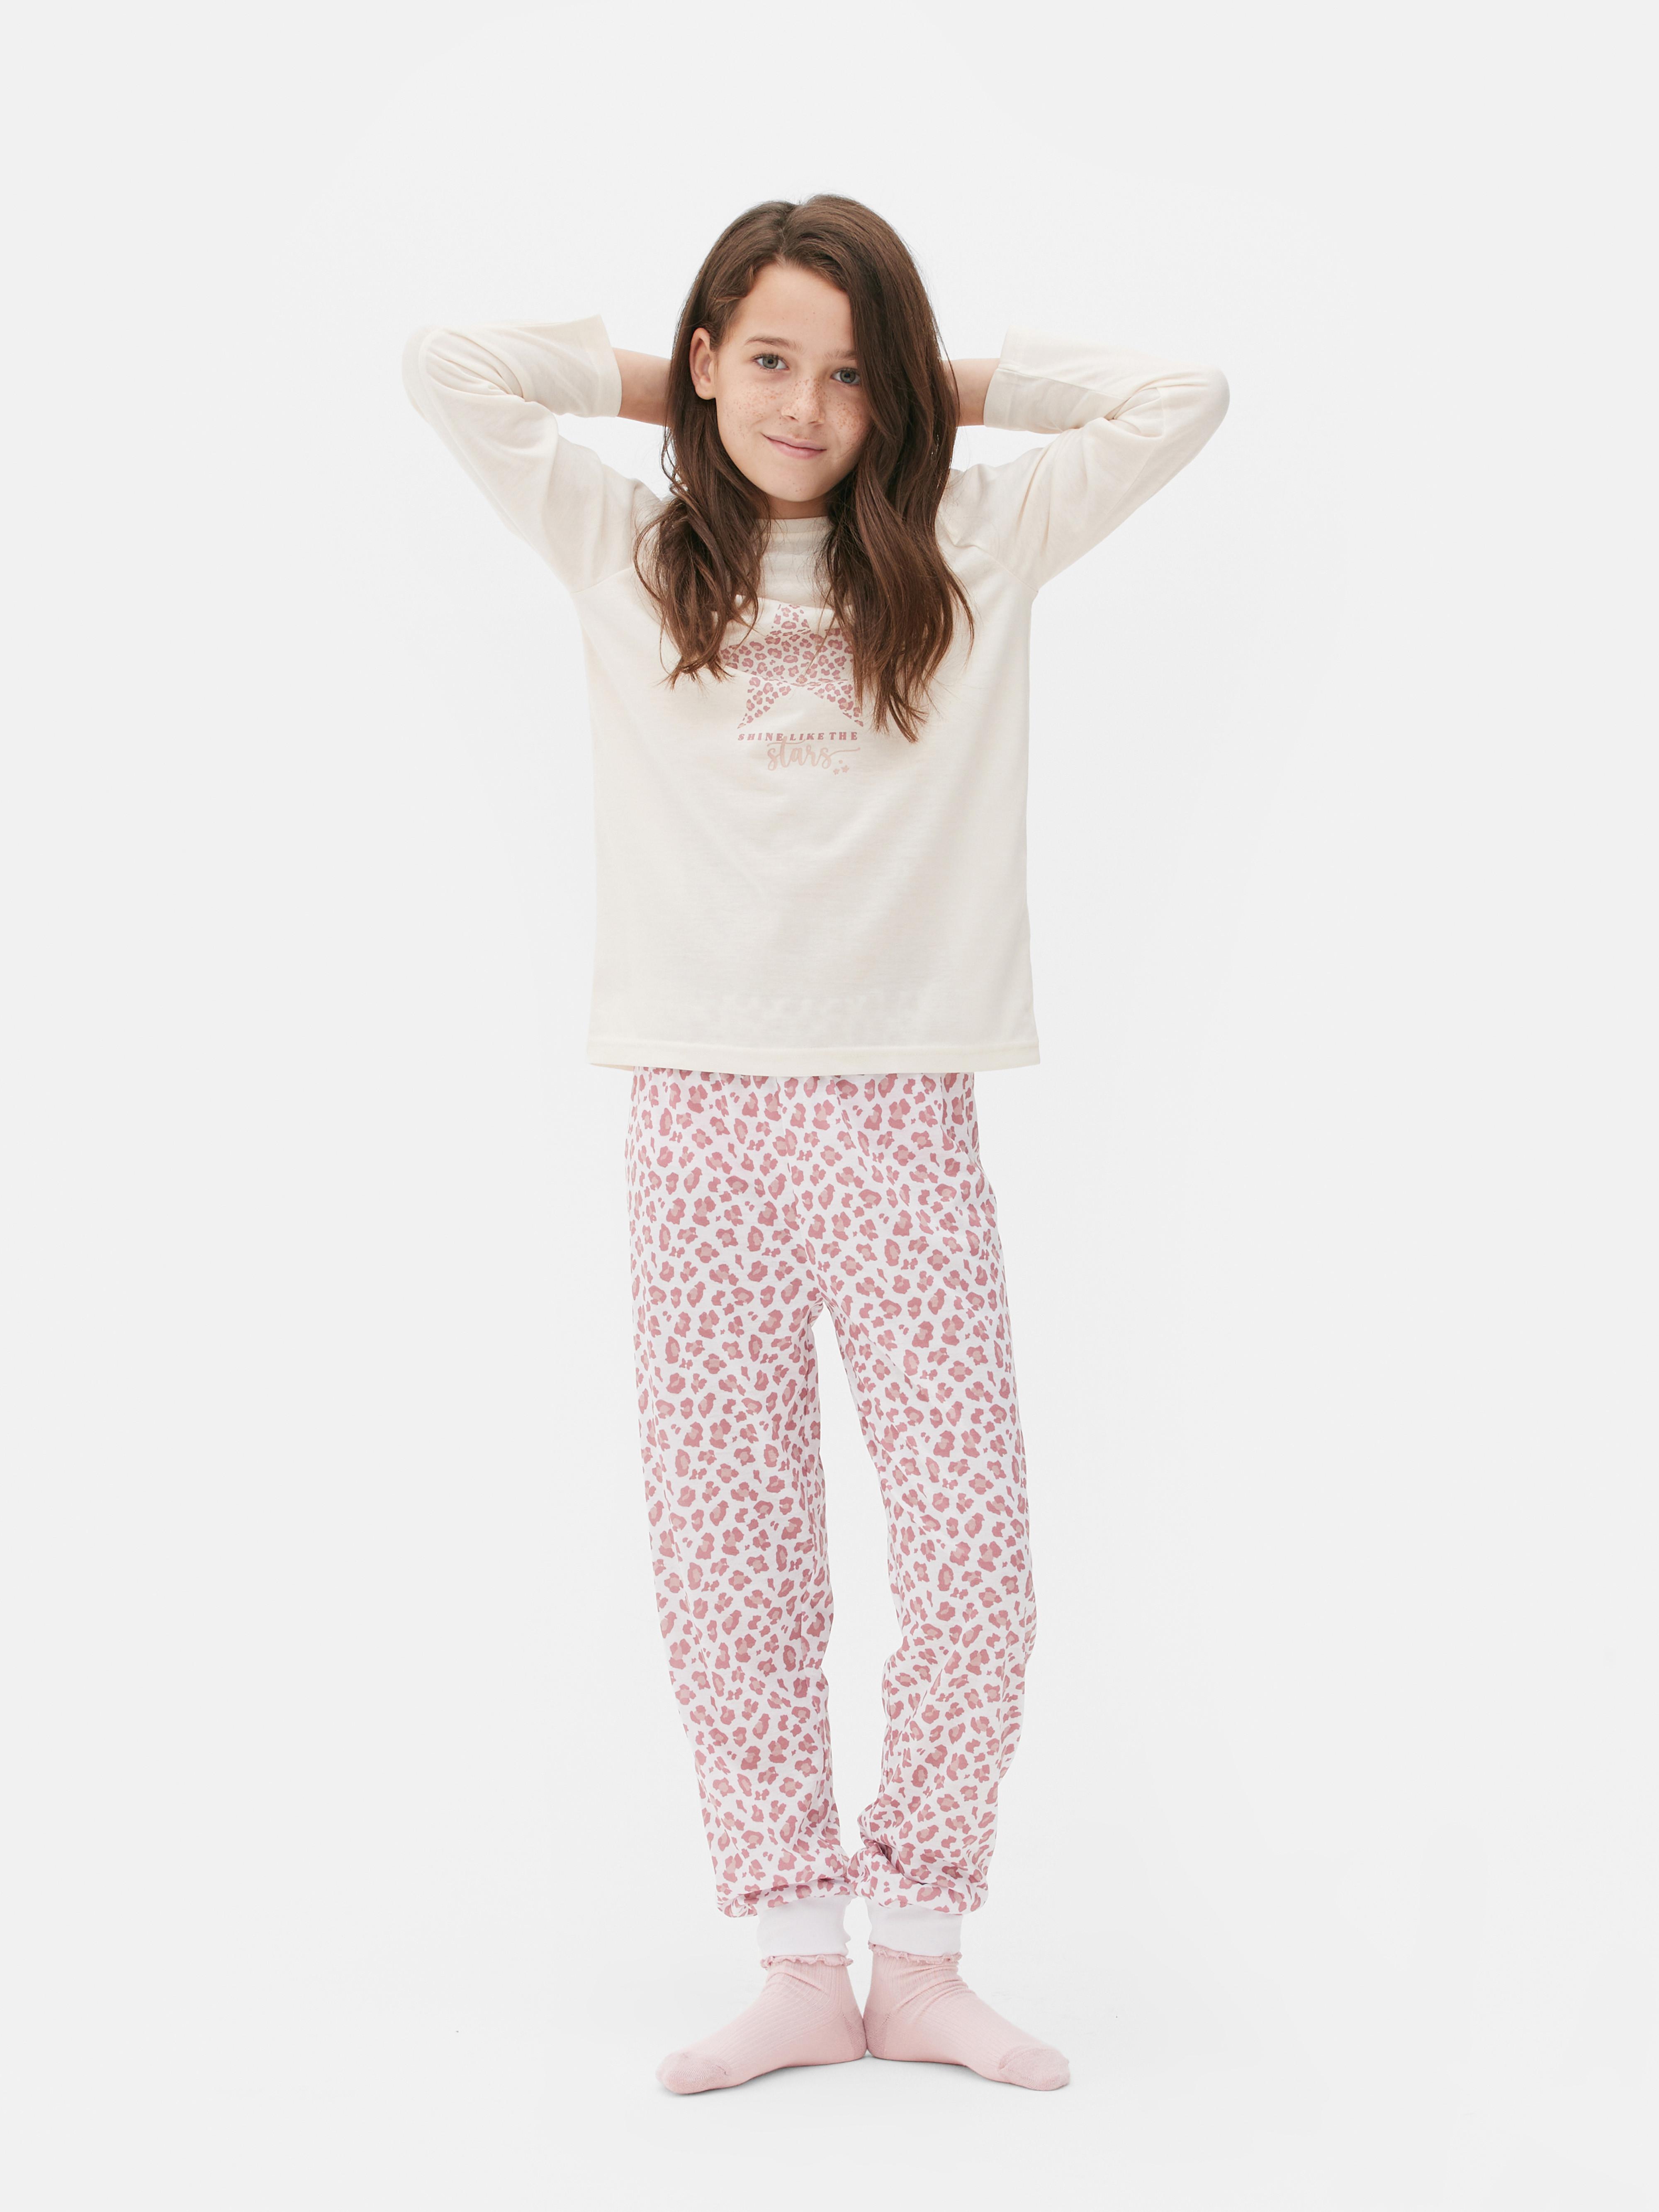 Leopard Star Print Pajamas